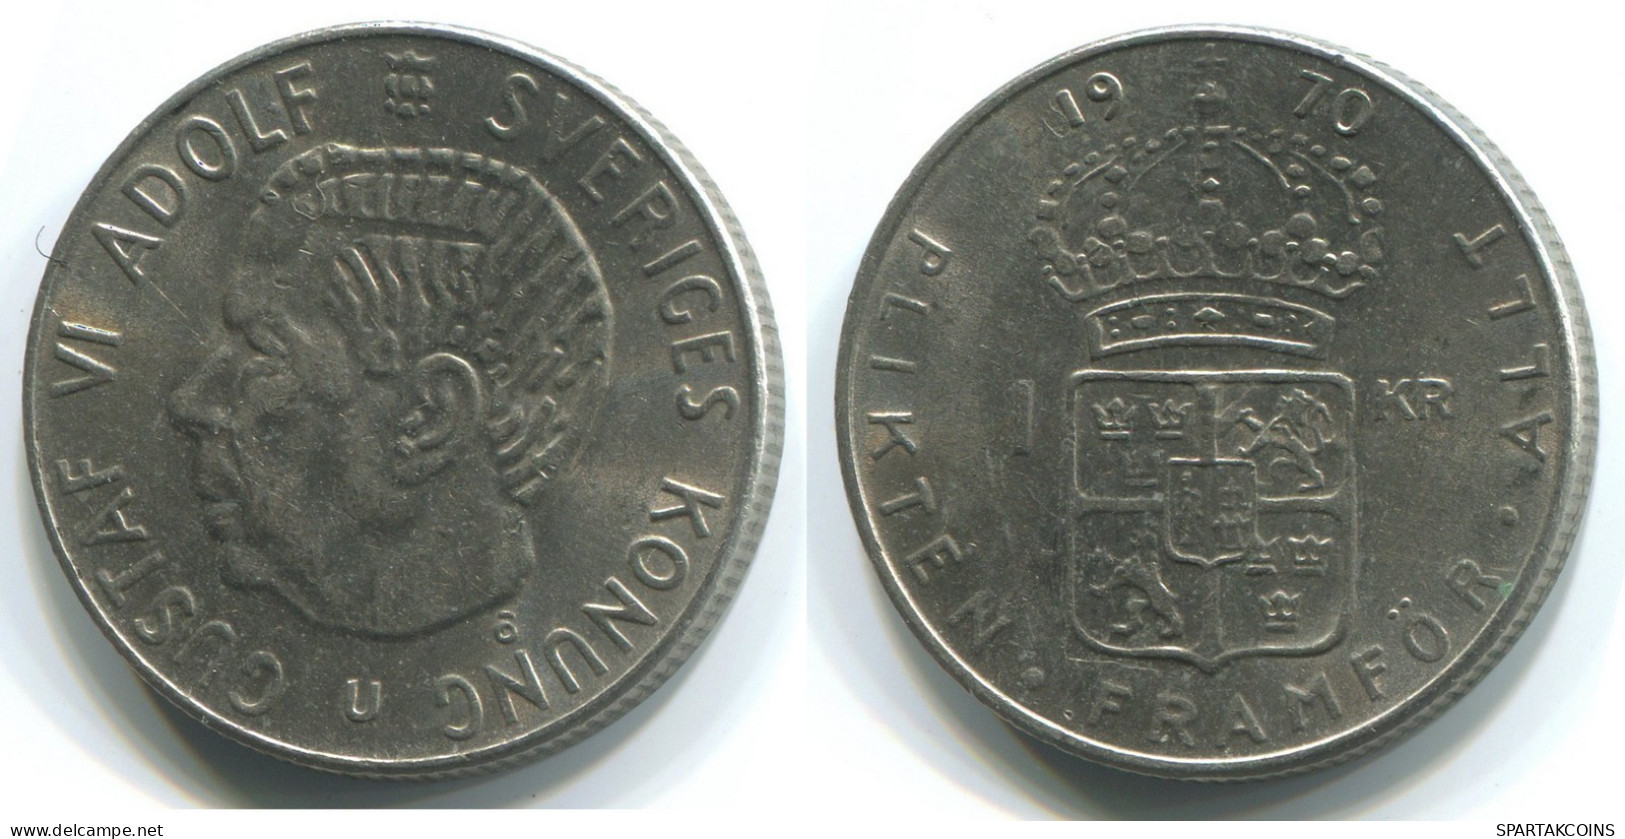 1 KRONA 1970 SUECIA SWEDEN Moneda #WW1094.E.A - Sweden